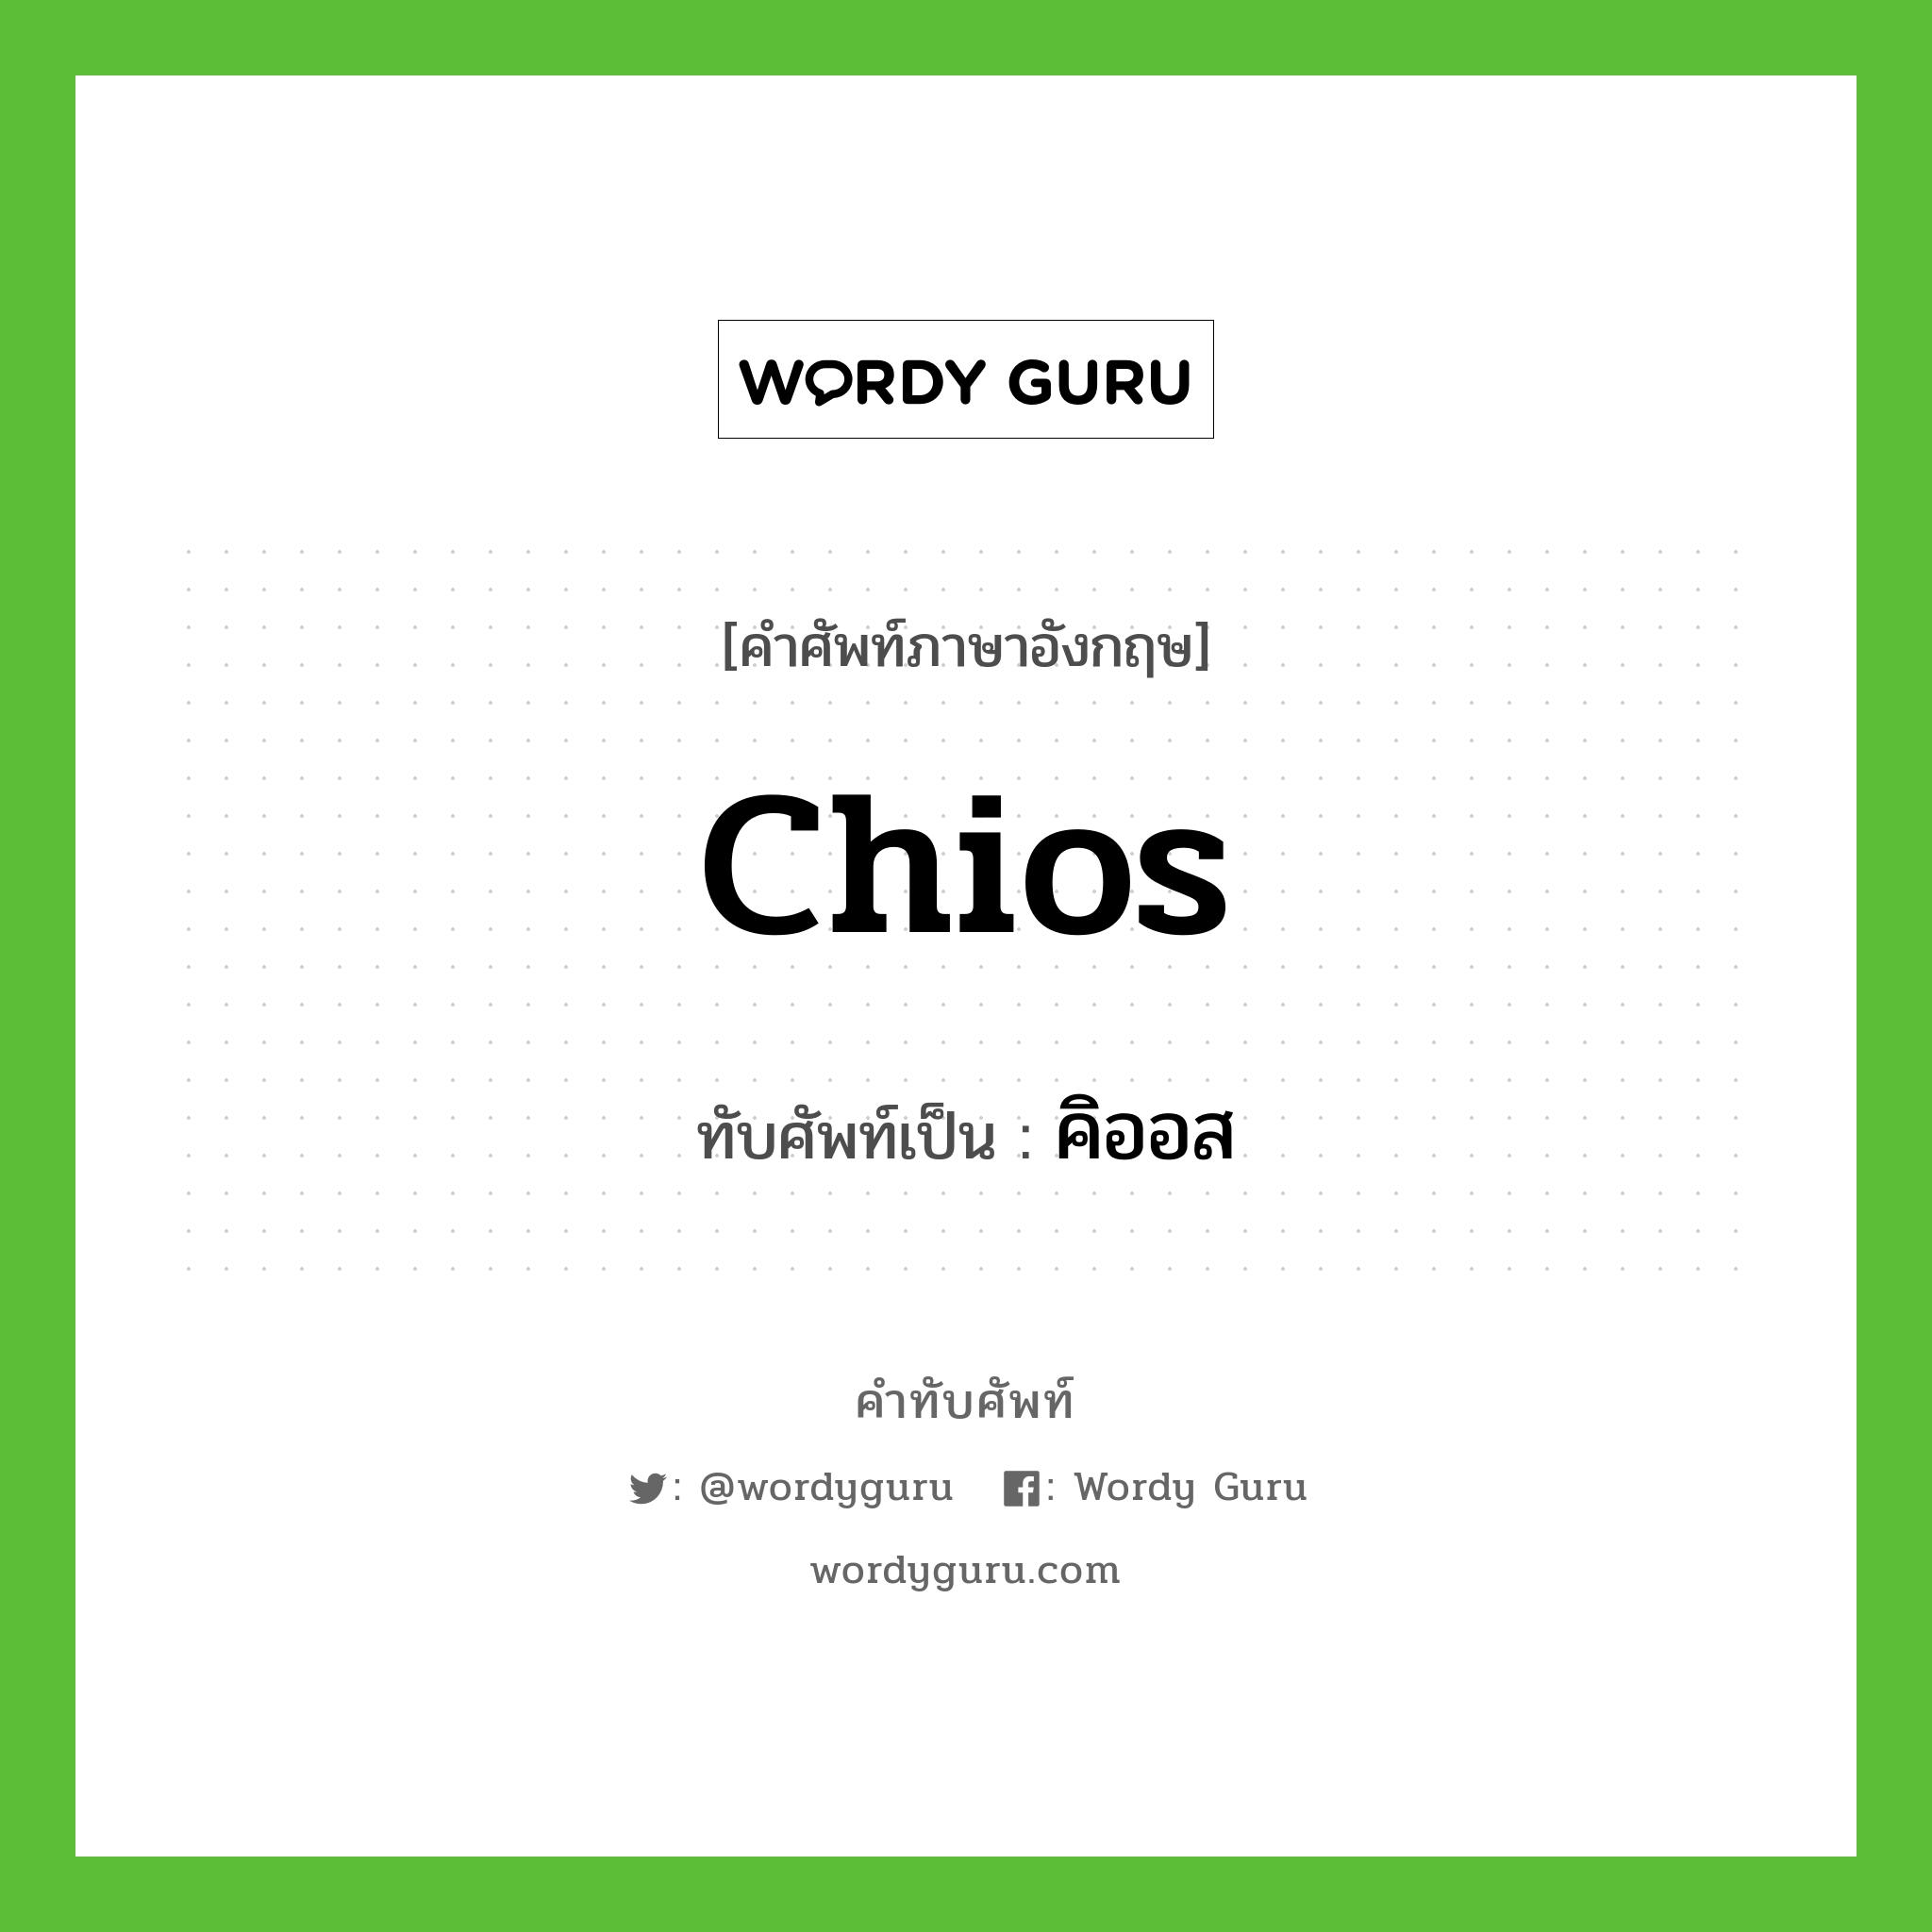 chios เขียนเป็นคำไทยว่าอะไร?, คำศัพท์ภาษาอังกฤษ chios ทับศัพท์เป็น คิออส